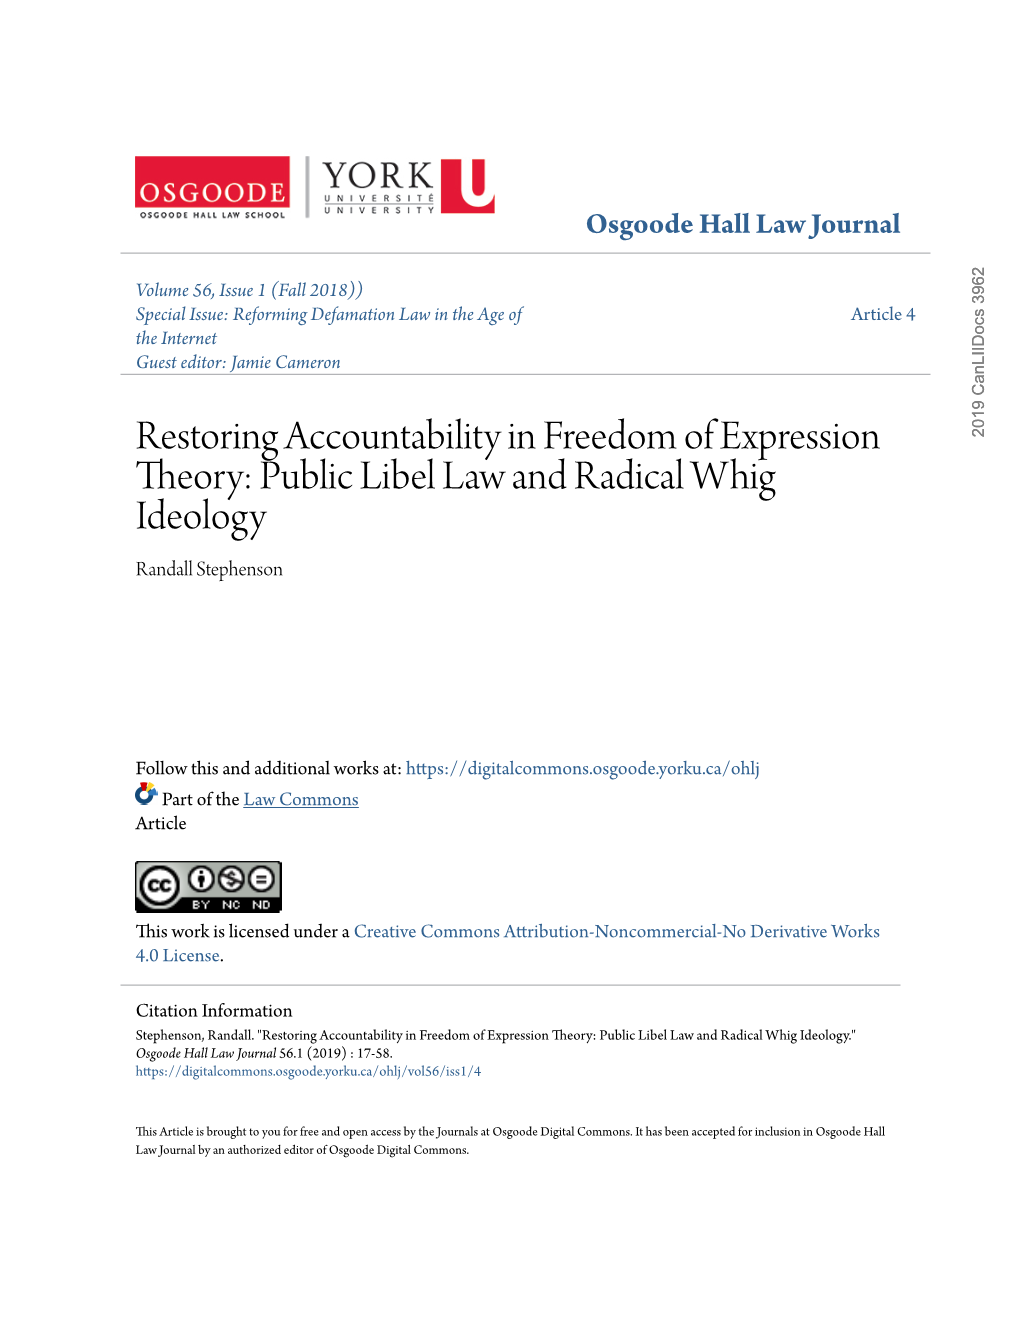 Public Libel Law and Radical Whig Ideology Randall Stephenson